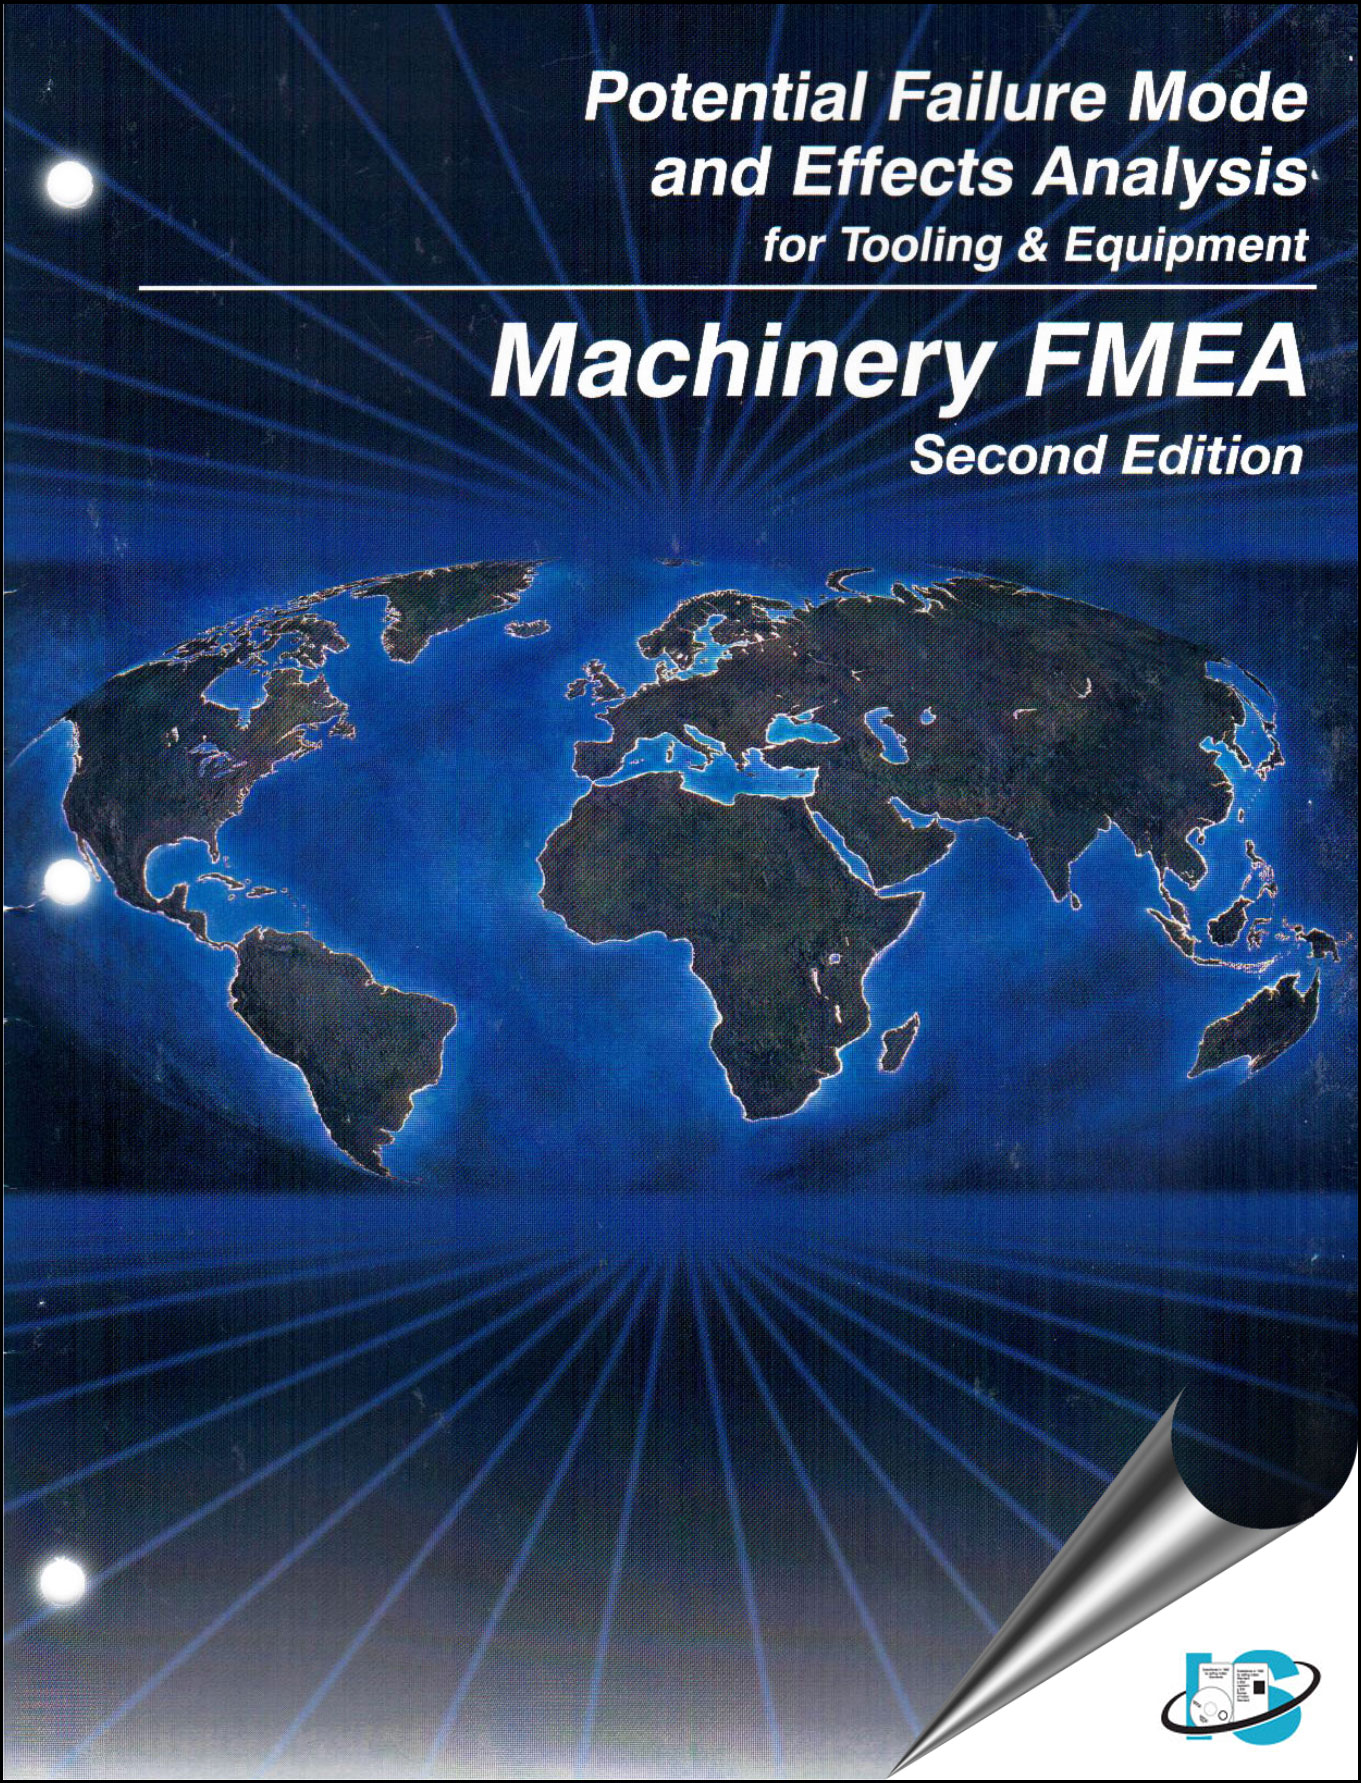 Ford motor company fmea handbook #9